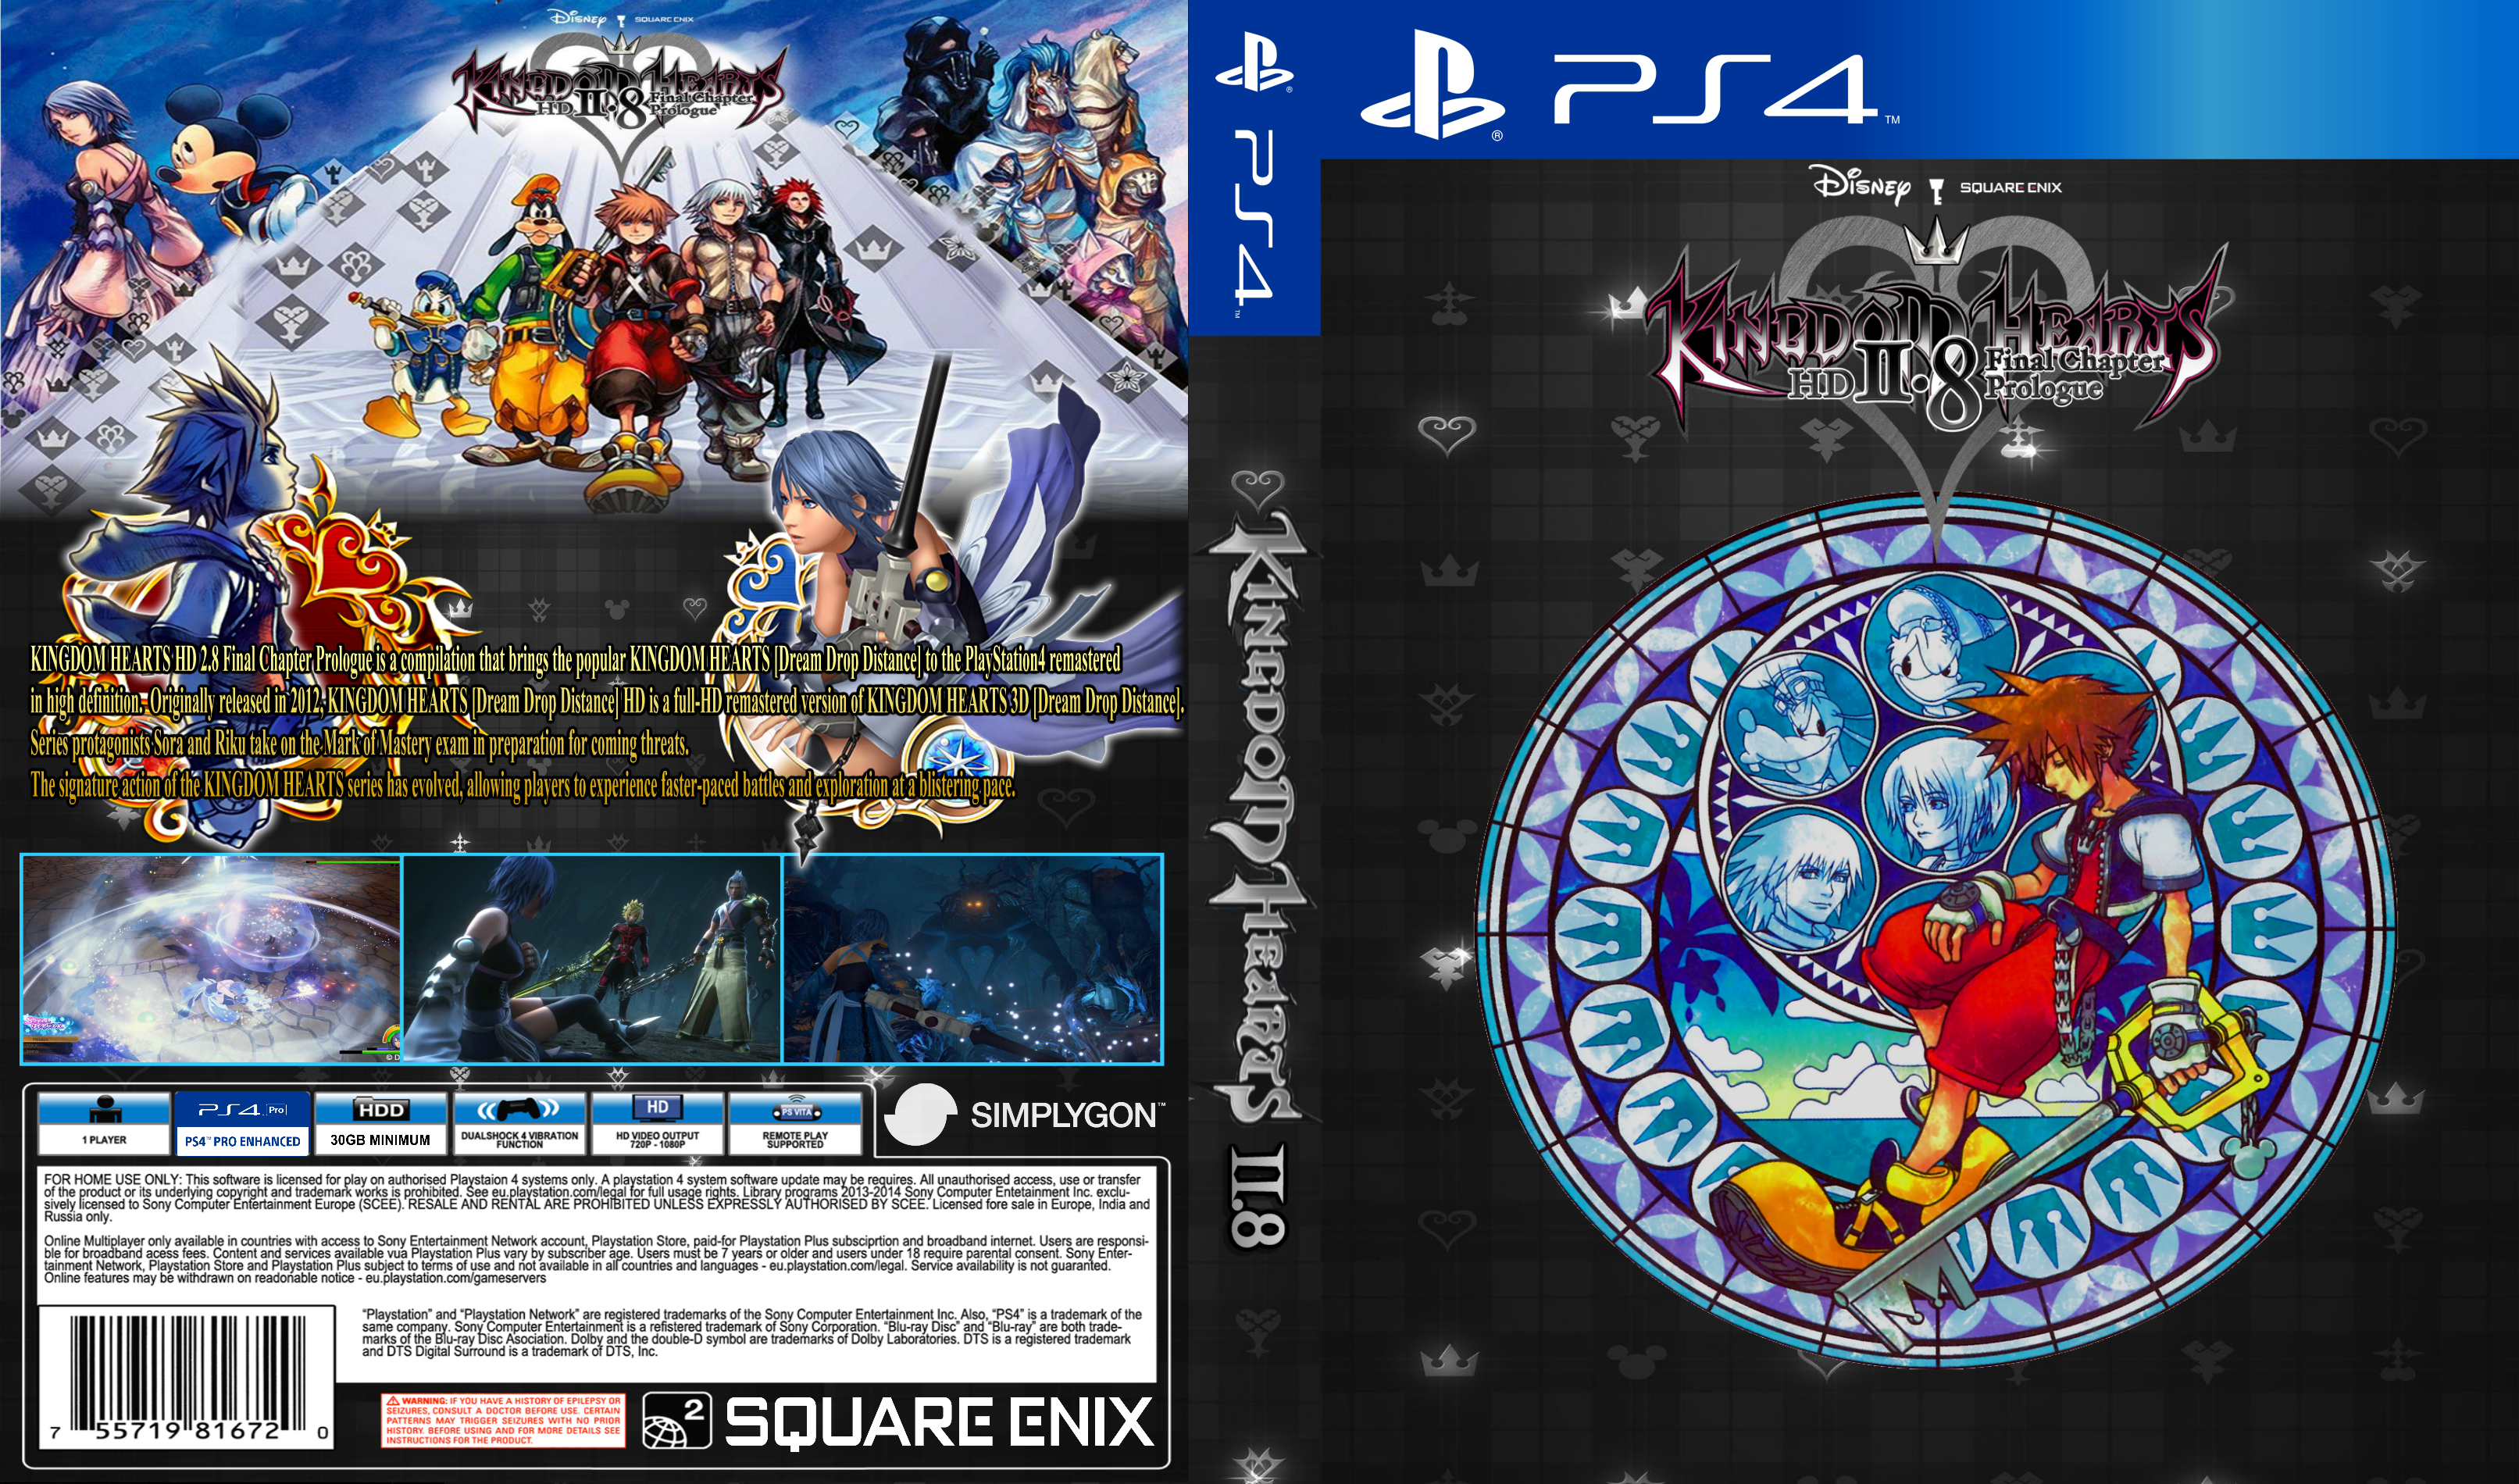 Jogo PS4 Kingdom Hearts 2.8 2 Botões Thumbstick Grátis